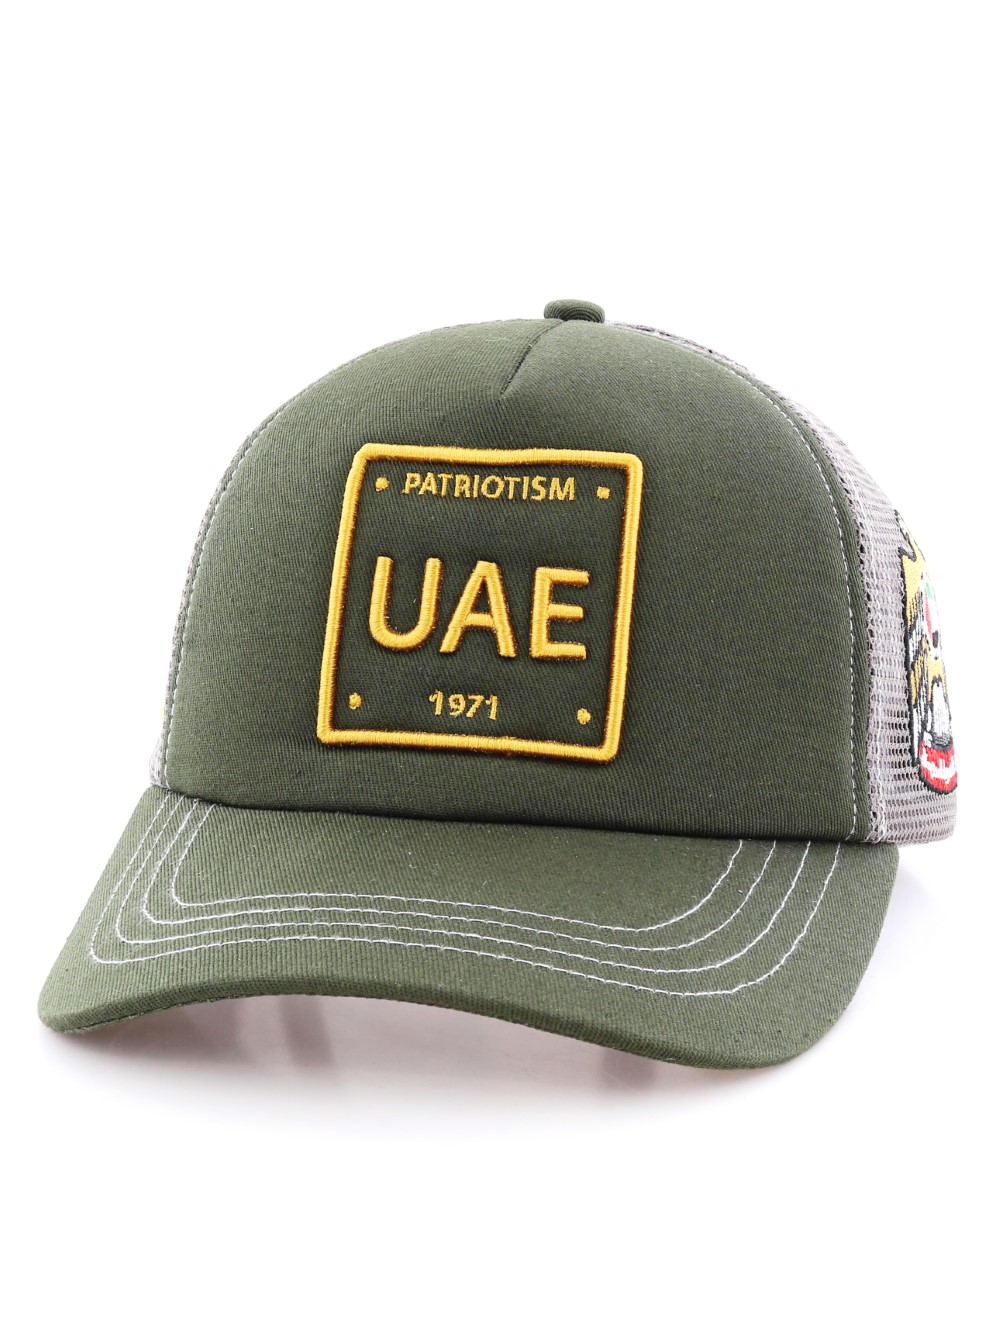 B180 UAE Patriotism Trucker Cap Green/Grey